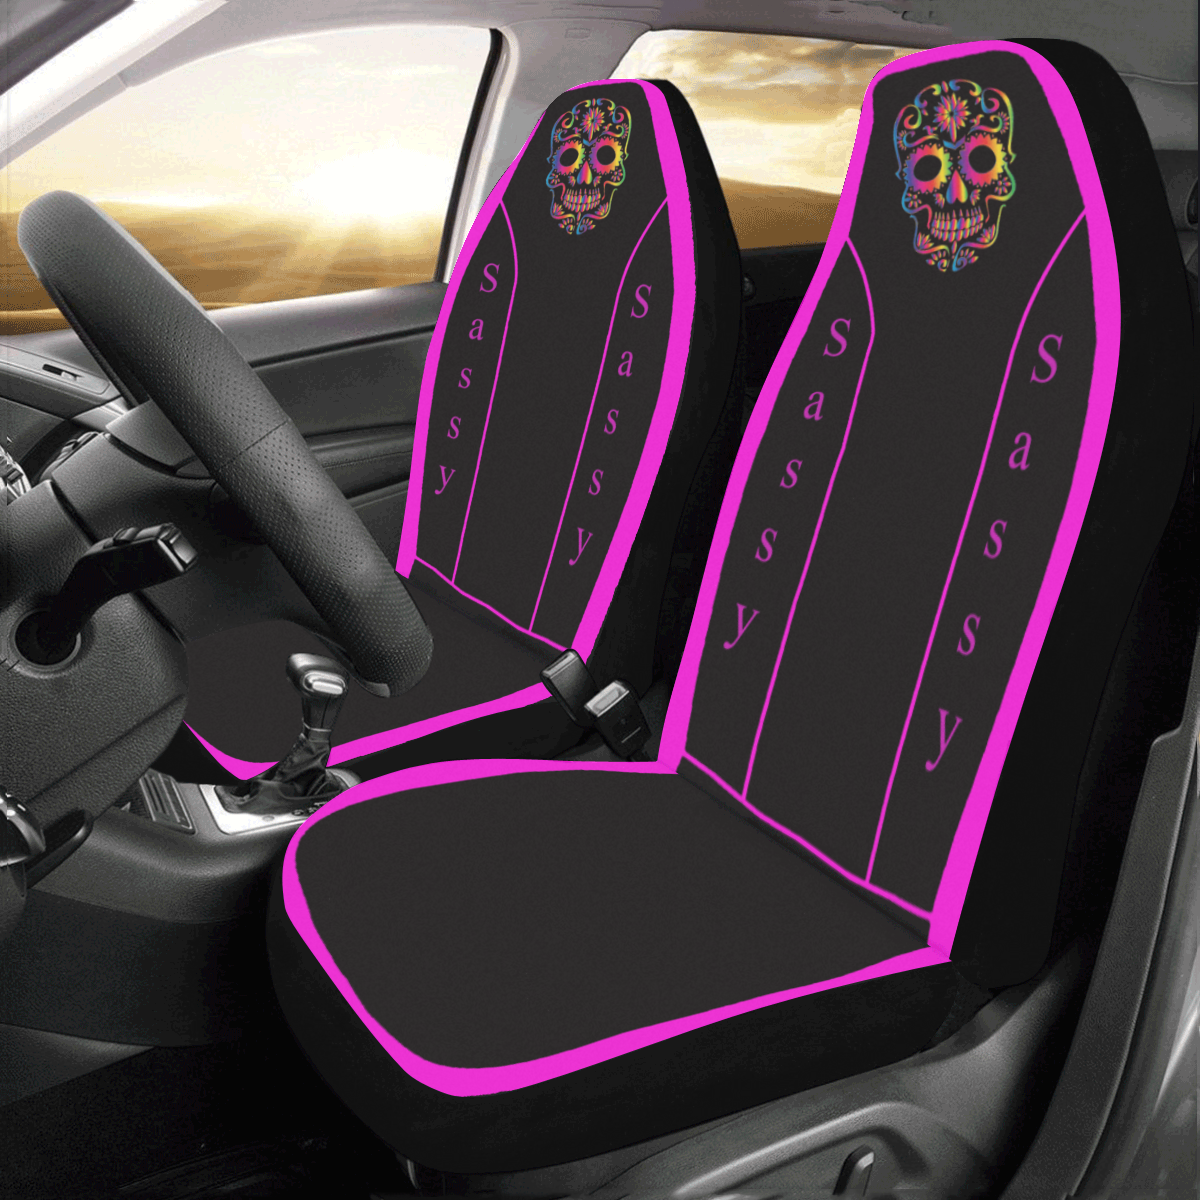 sassy-Sugar-Skull Car Seat Covers (Set of 2)